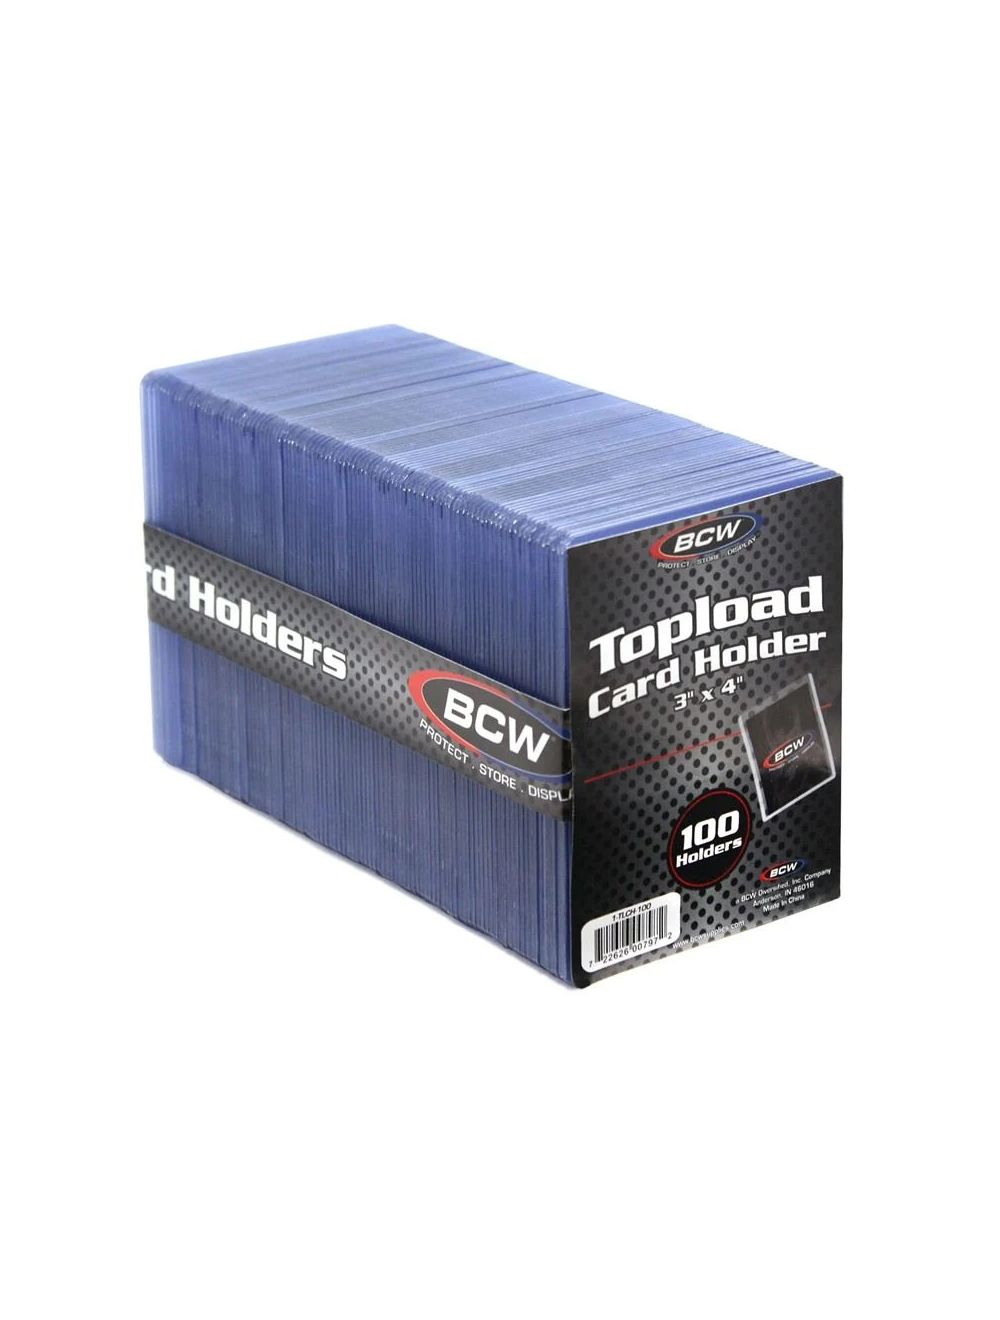 toploads/ toploaders load 200 3" x 4" BCW Card Topload Holders Standard Cards 